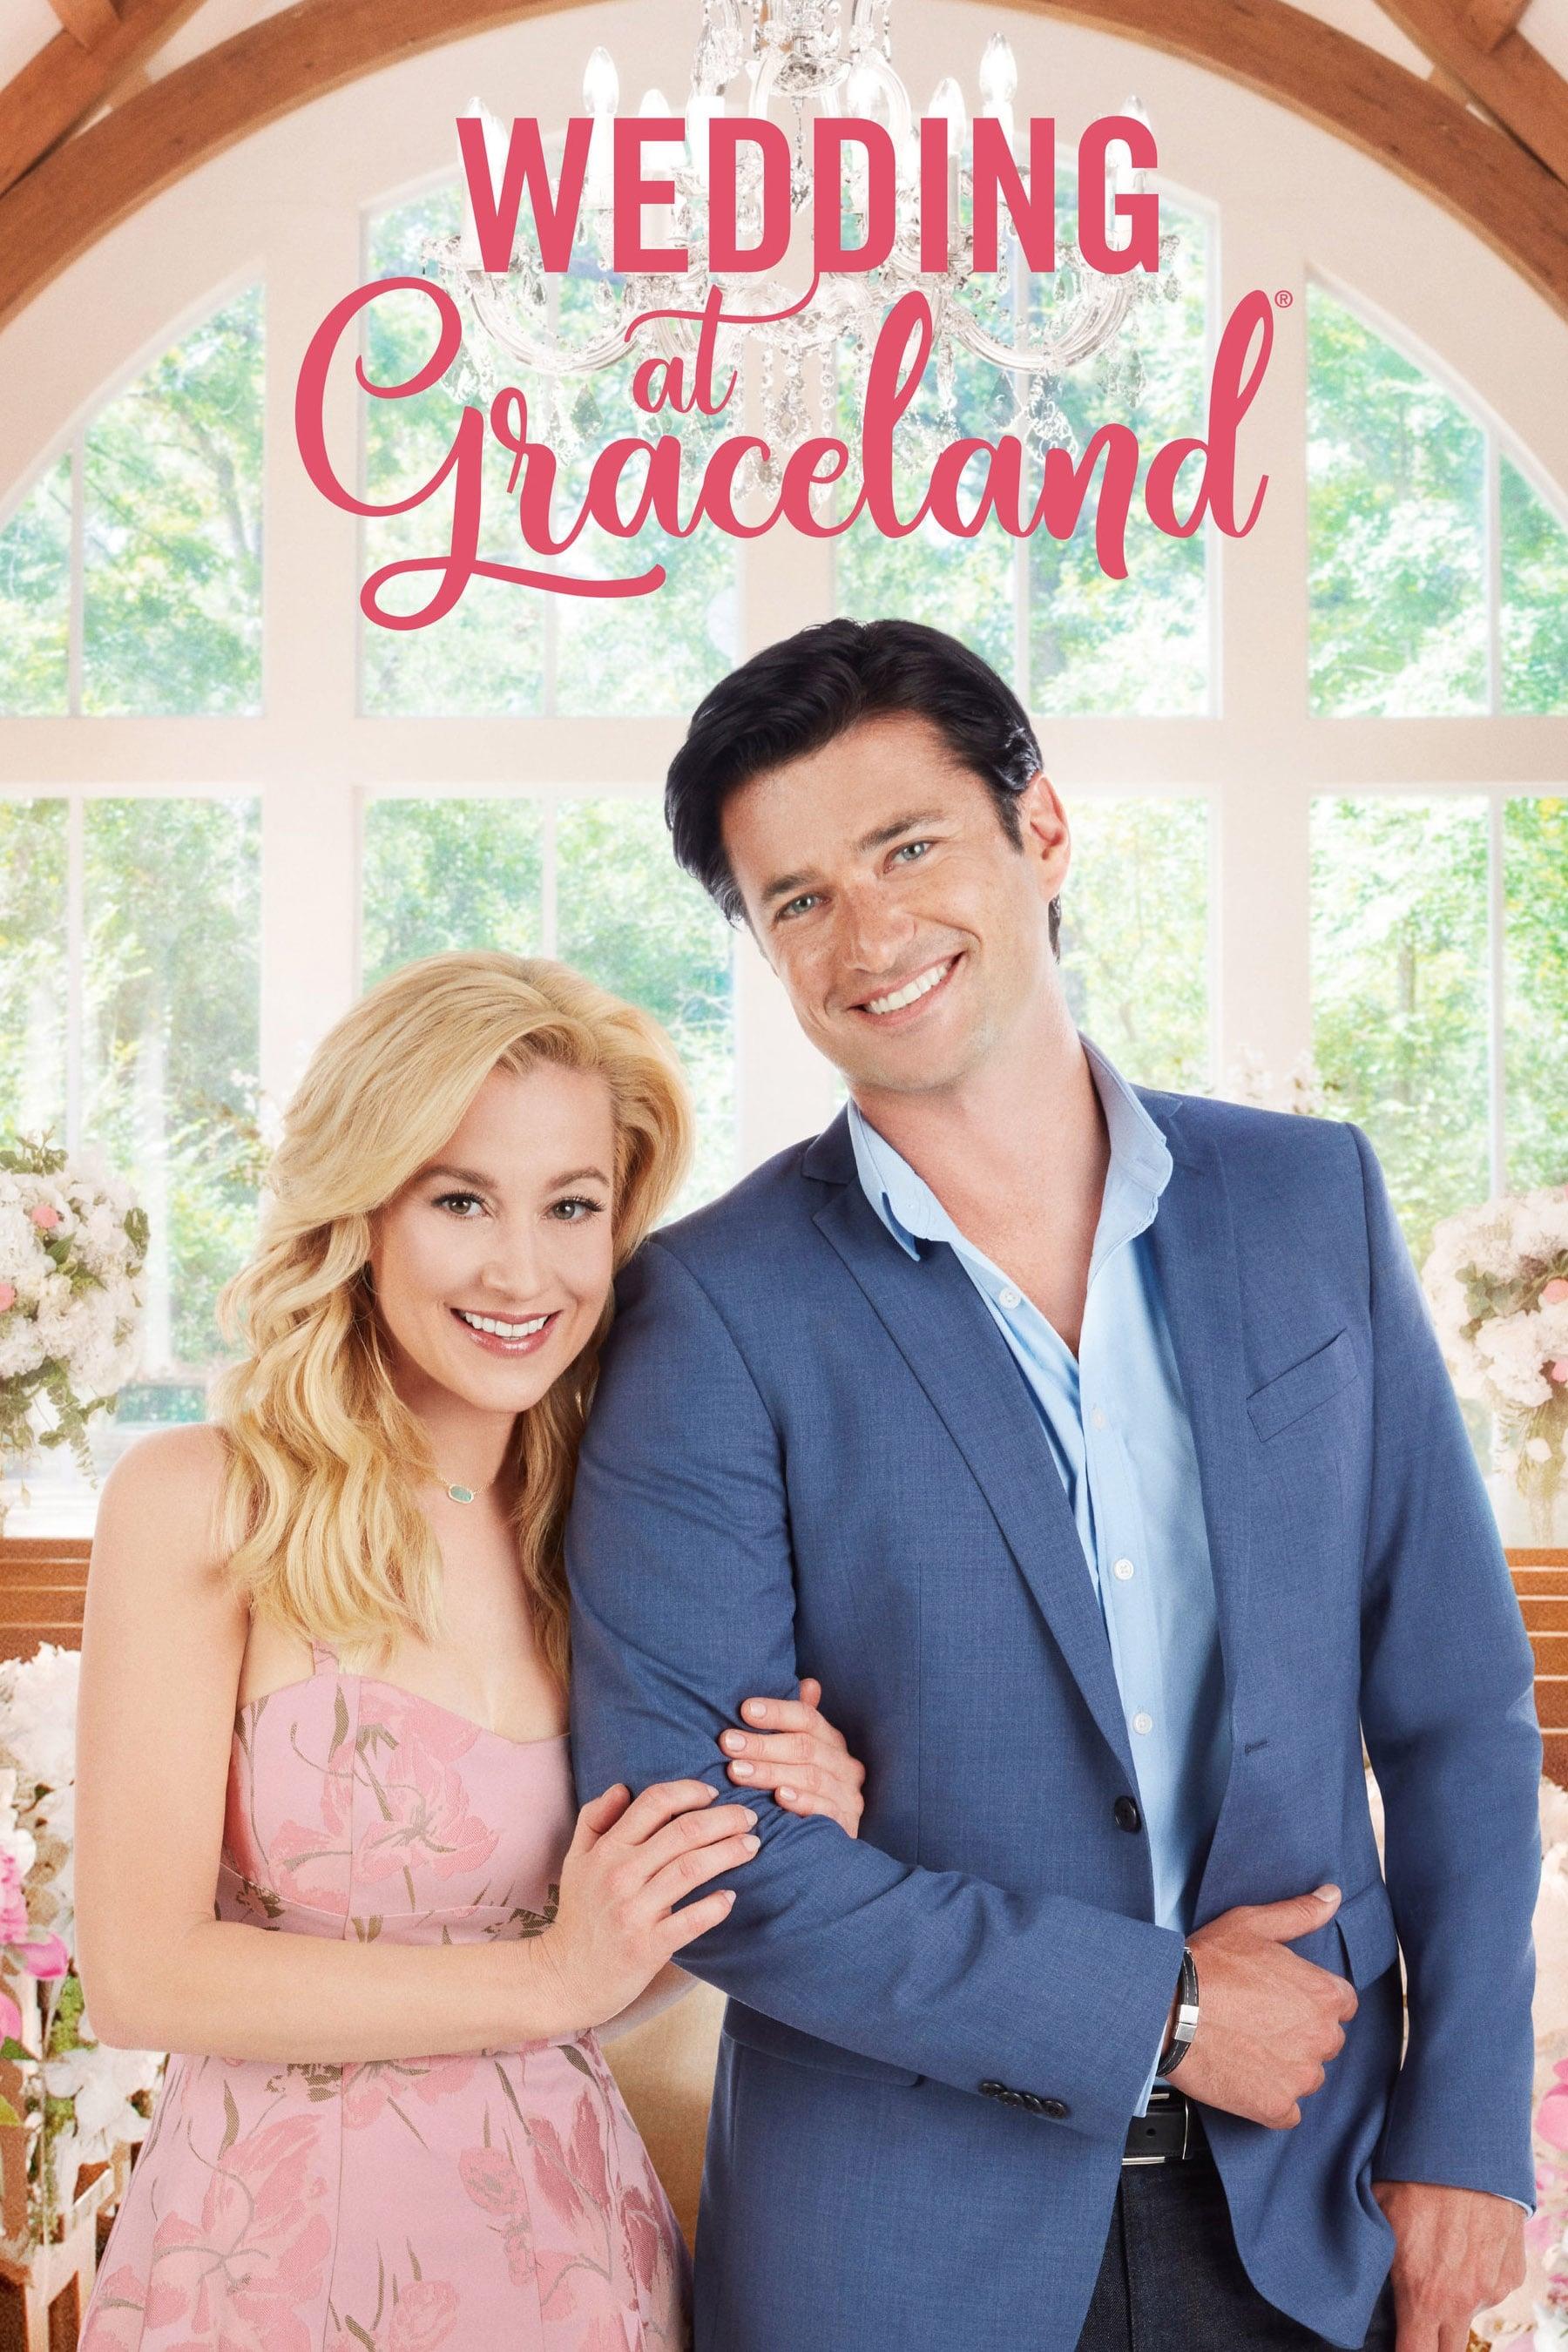 Wedding at Graceland poster